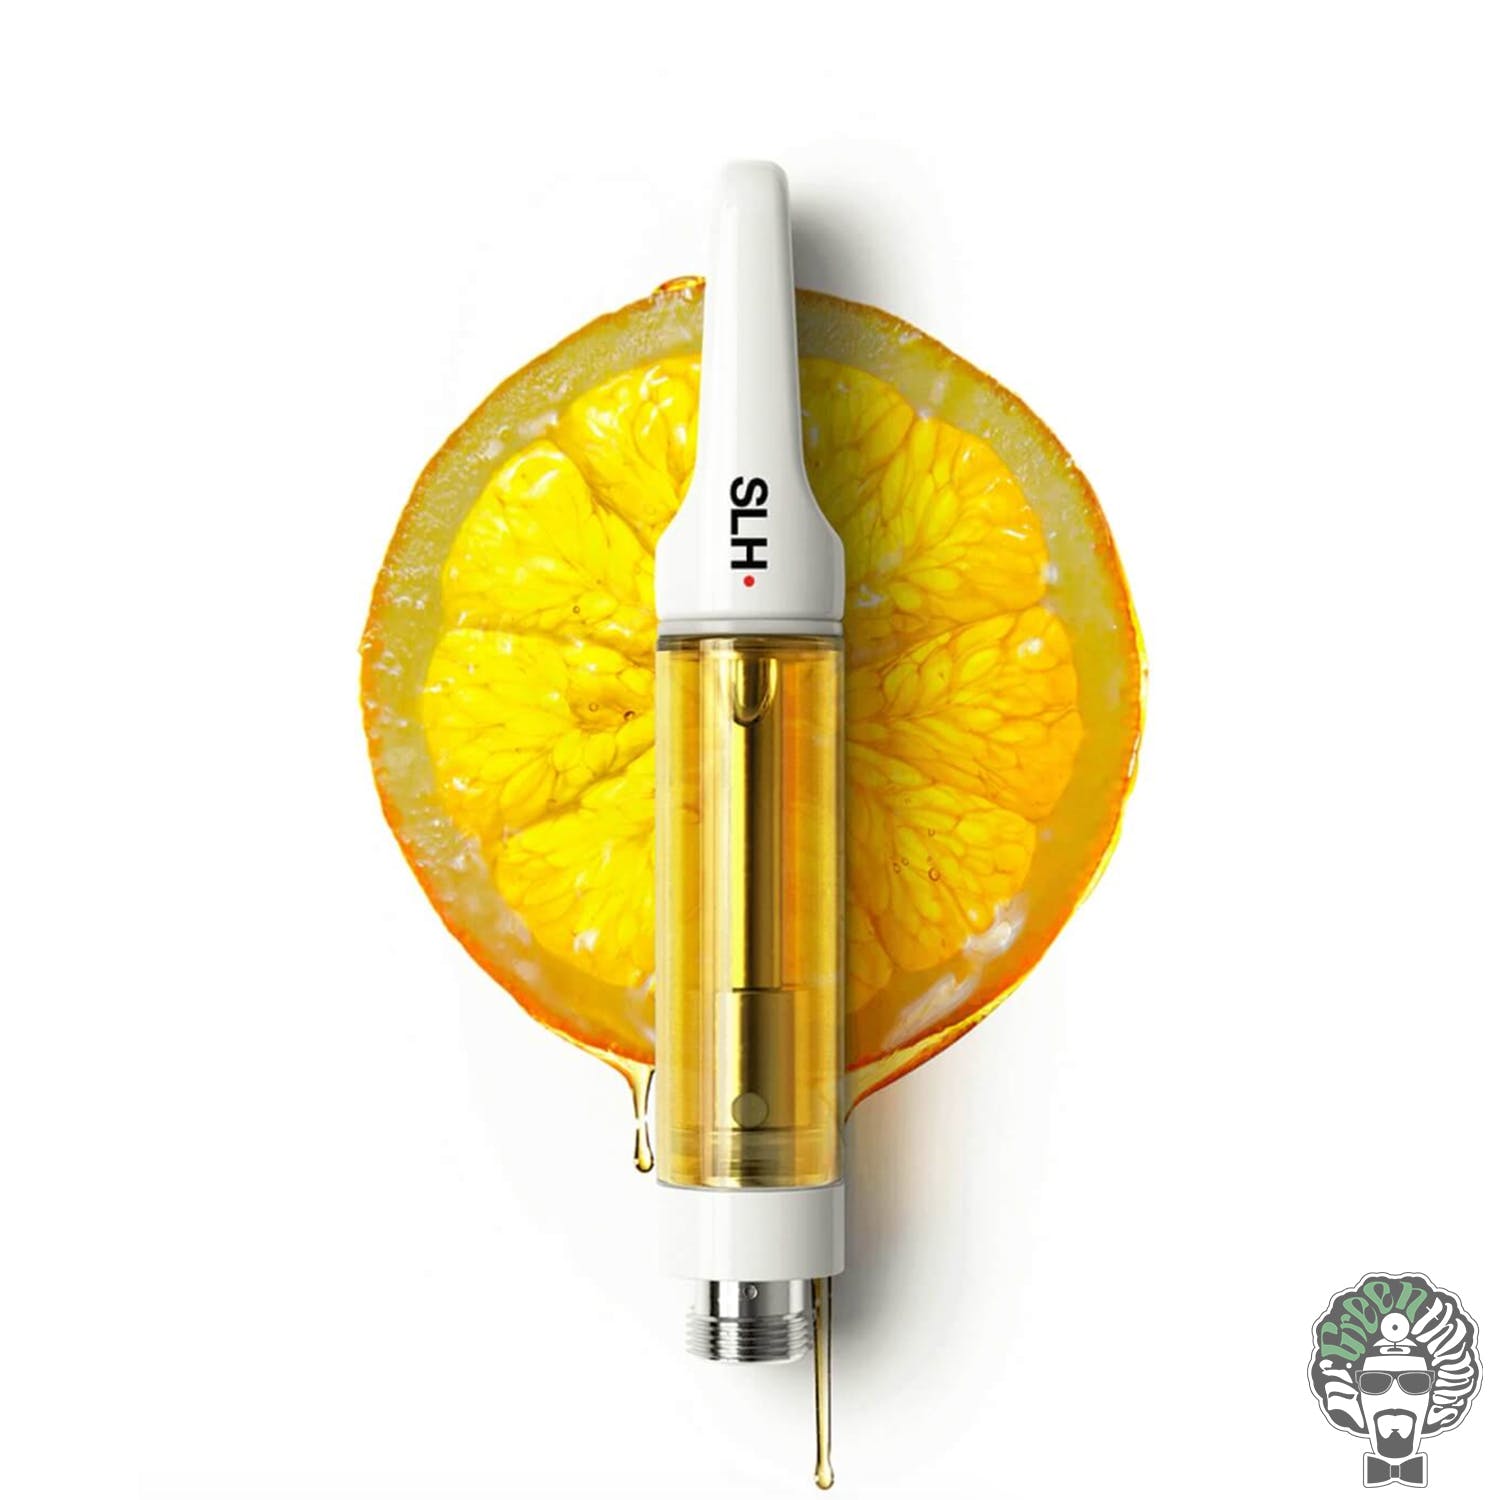 Super Lemon Haze 1g Cartridge By Bloom